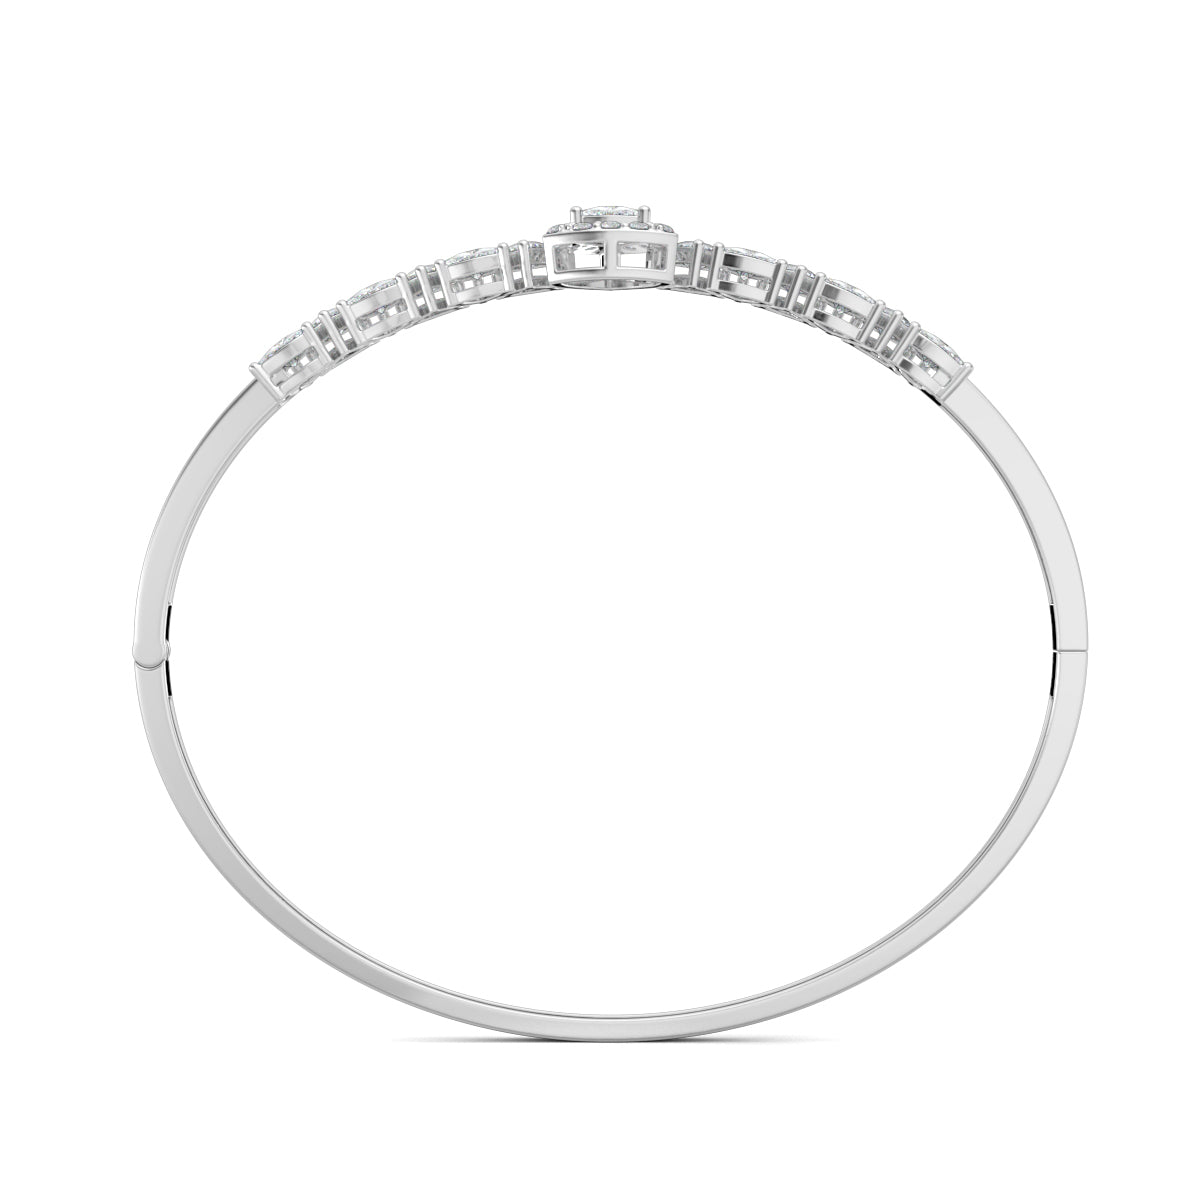 White Gold, Diamond Bracelet, Natural diamond bracelet, Lab-grown diamond bracelet, Oval diamond bracelet, Trillion-cut diamond bracelet, Pave-set diamond bracelet, Ethical diamond jewelry